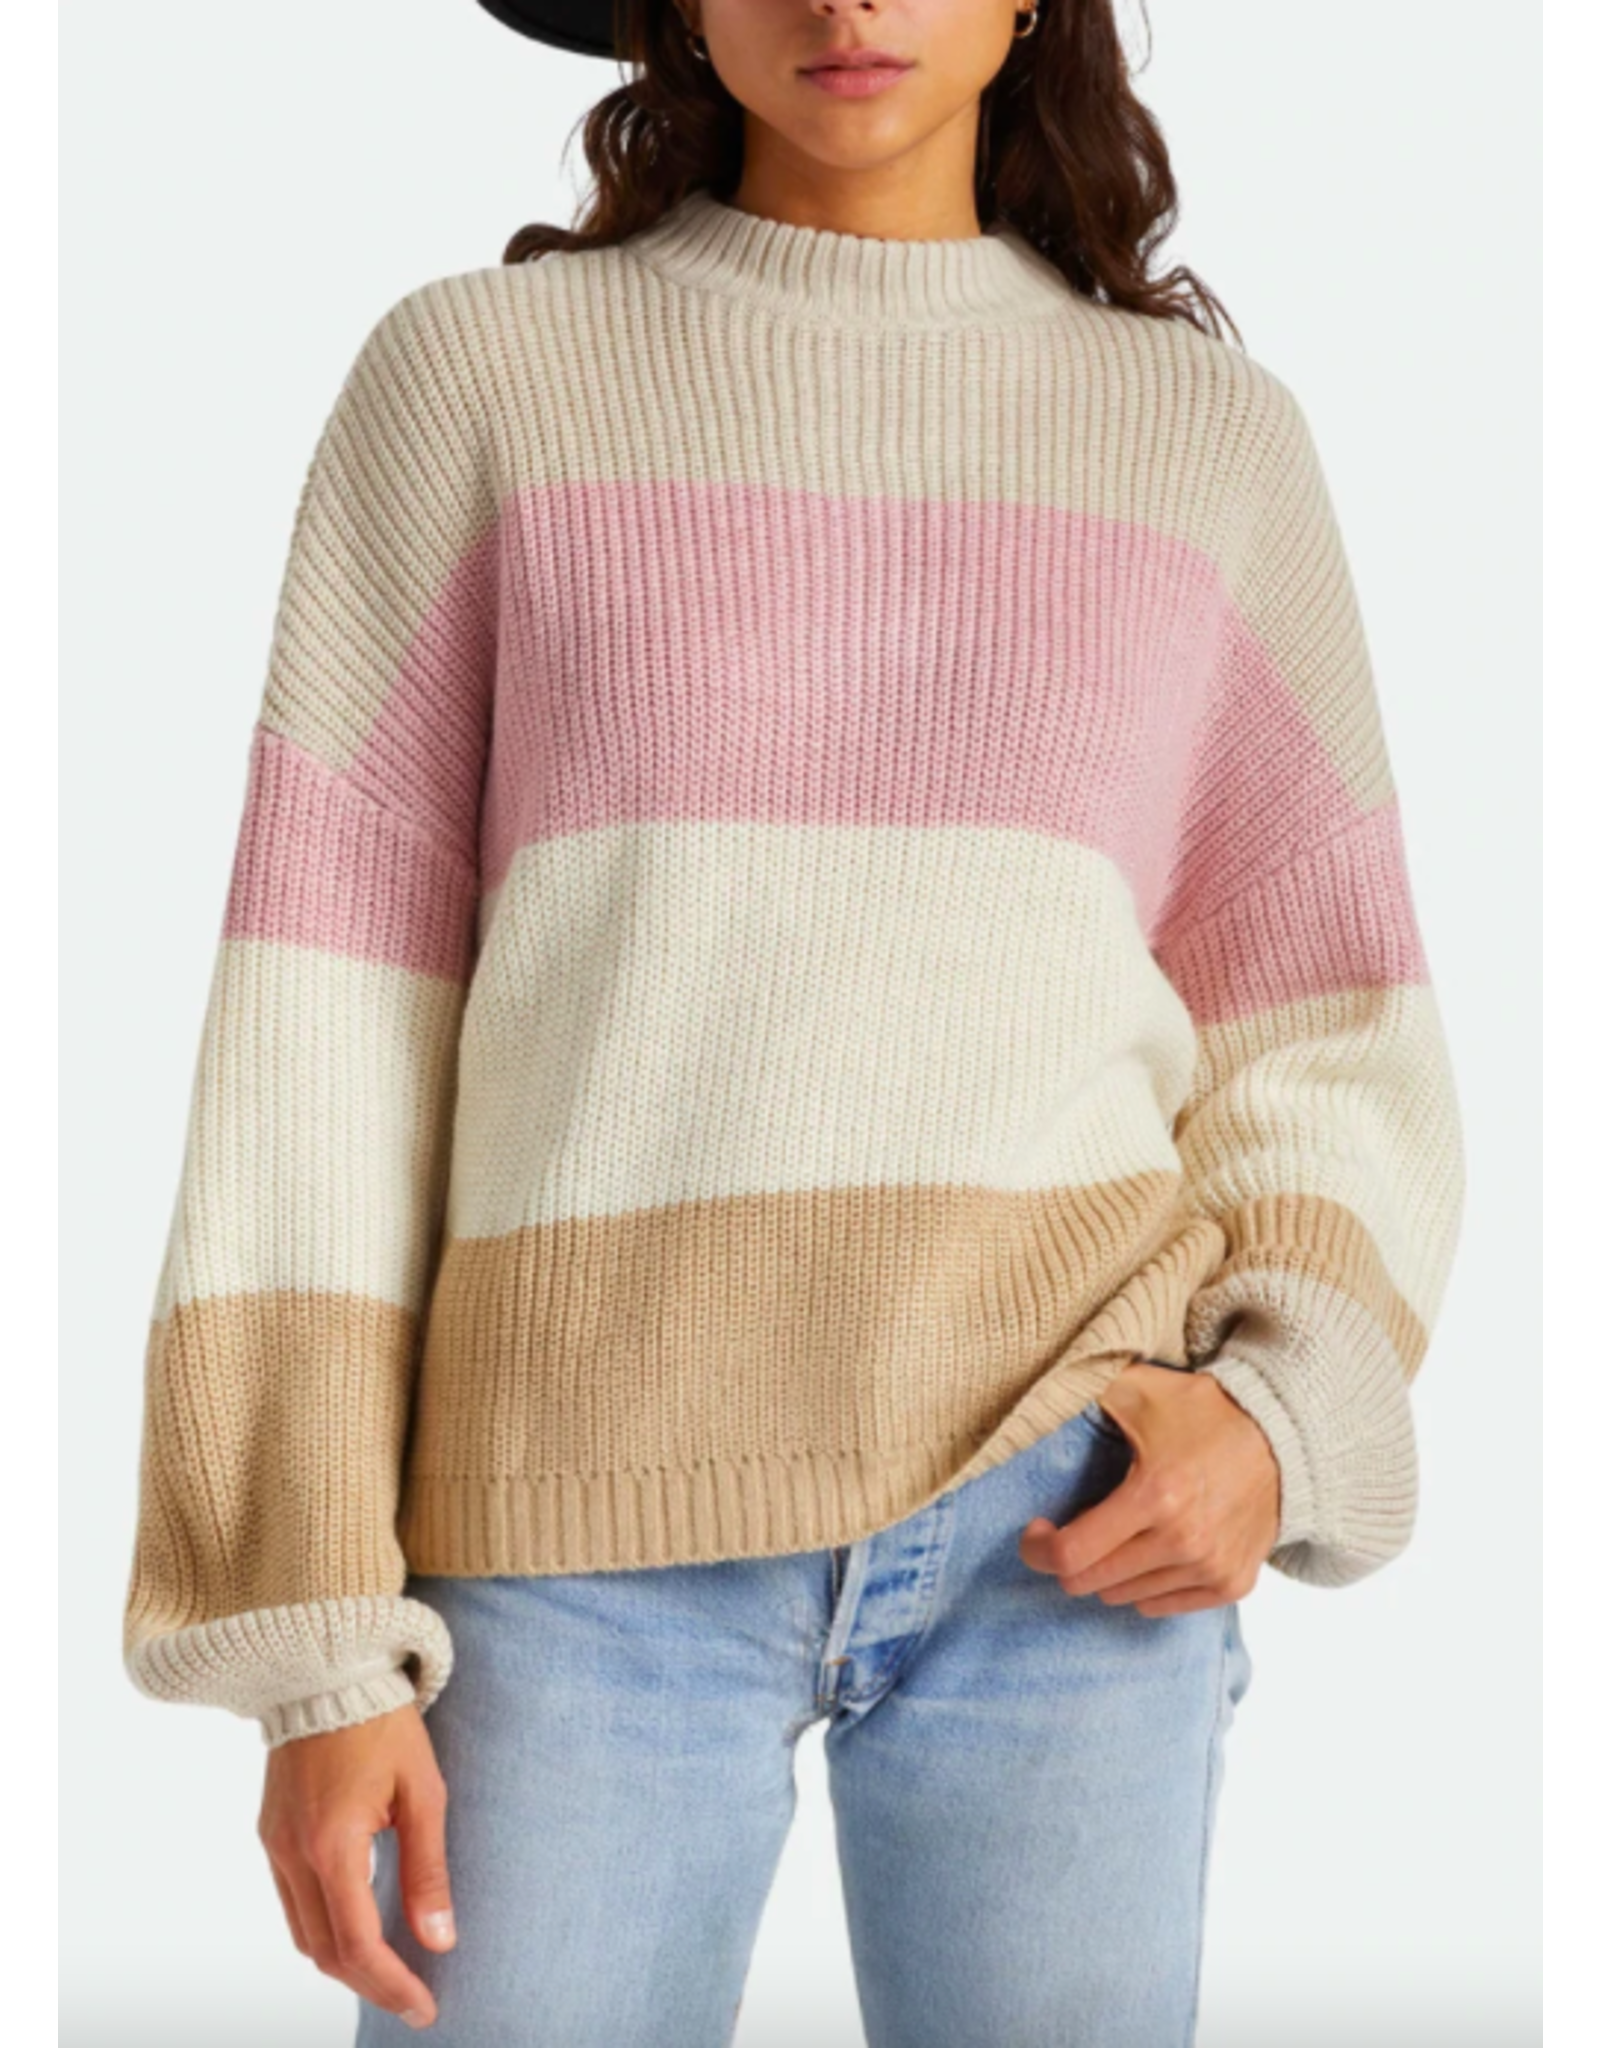 Brixton Women's Madero Sweater